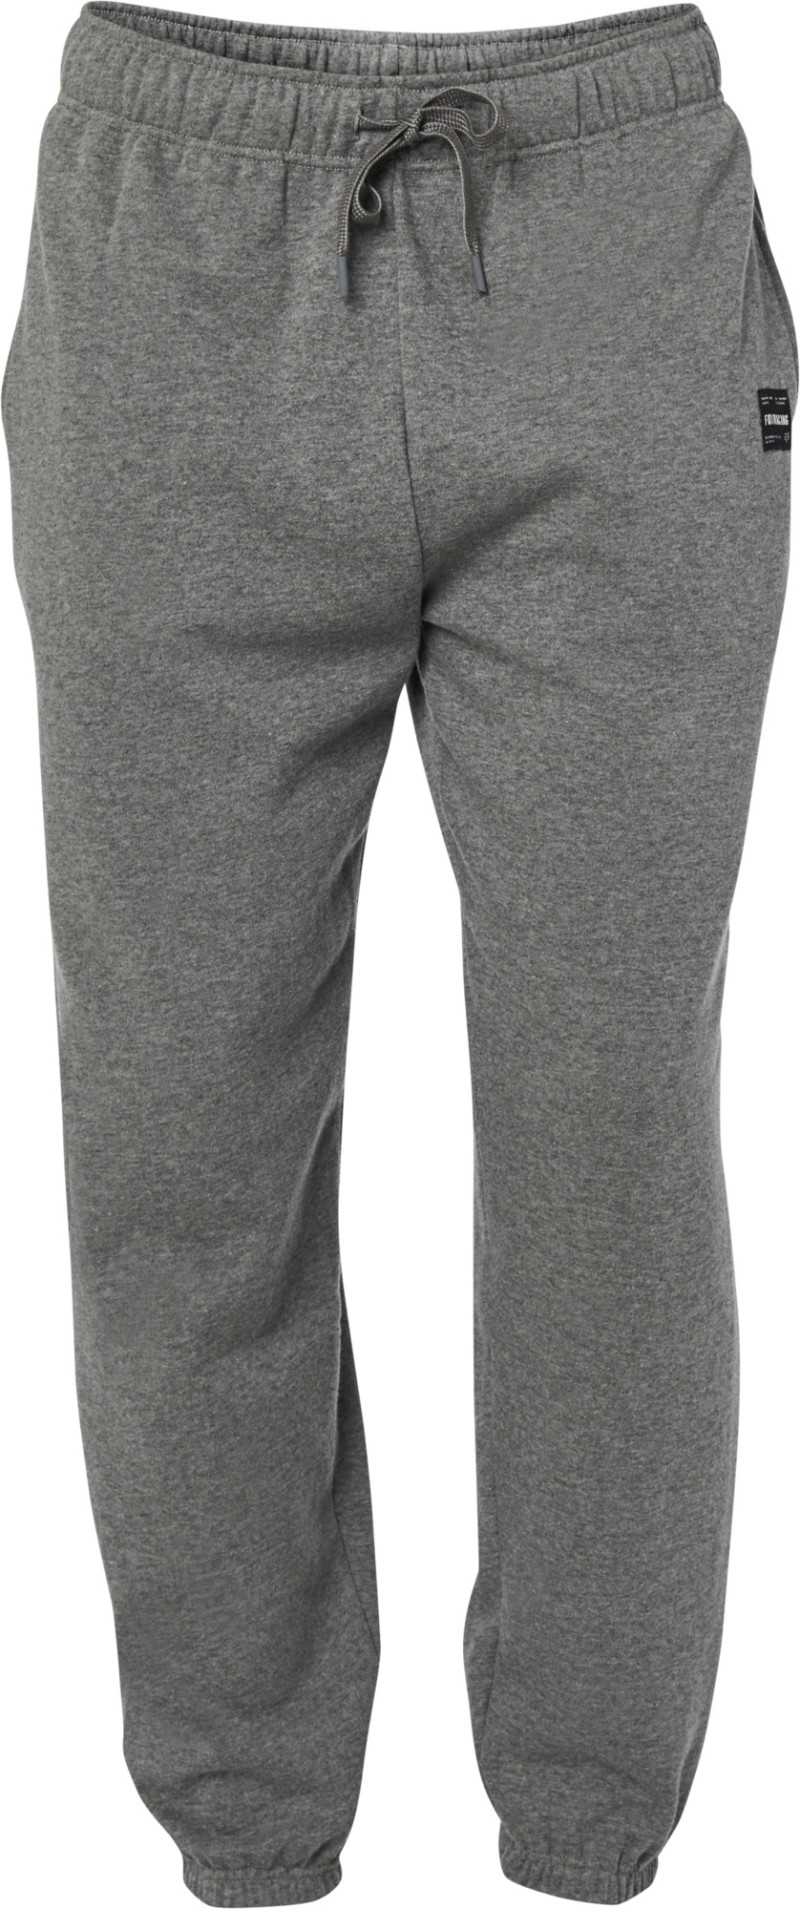 fox racing pants  standard issue fleece pants - casual